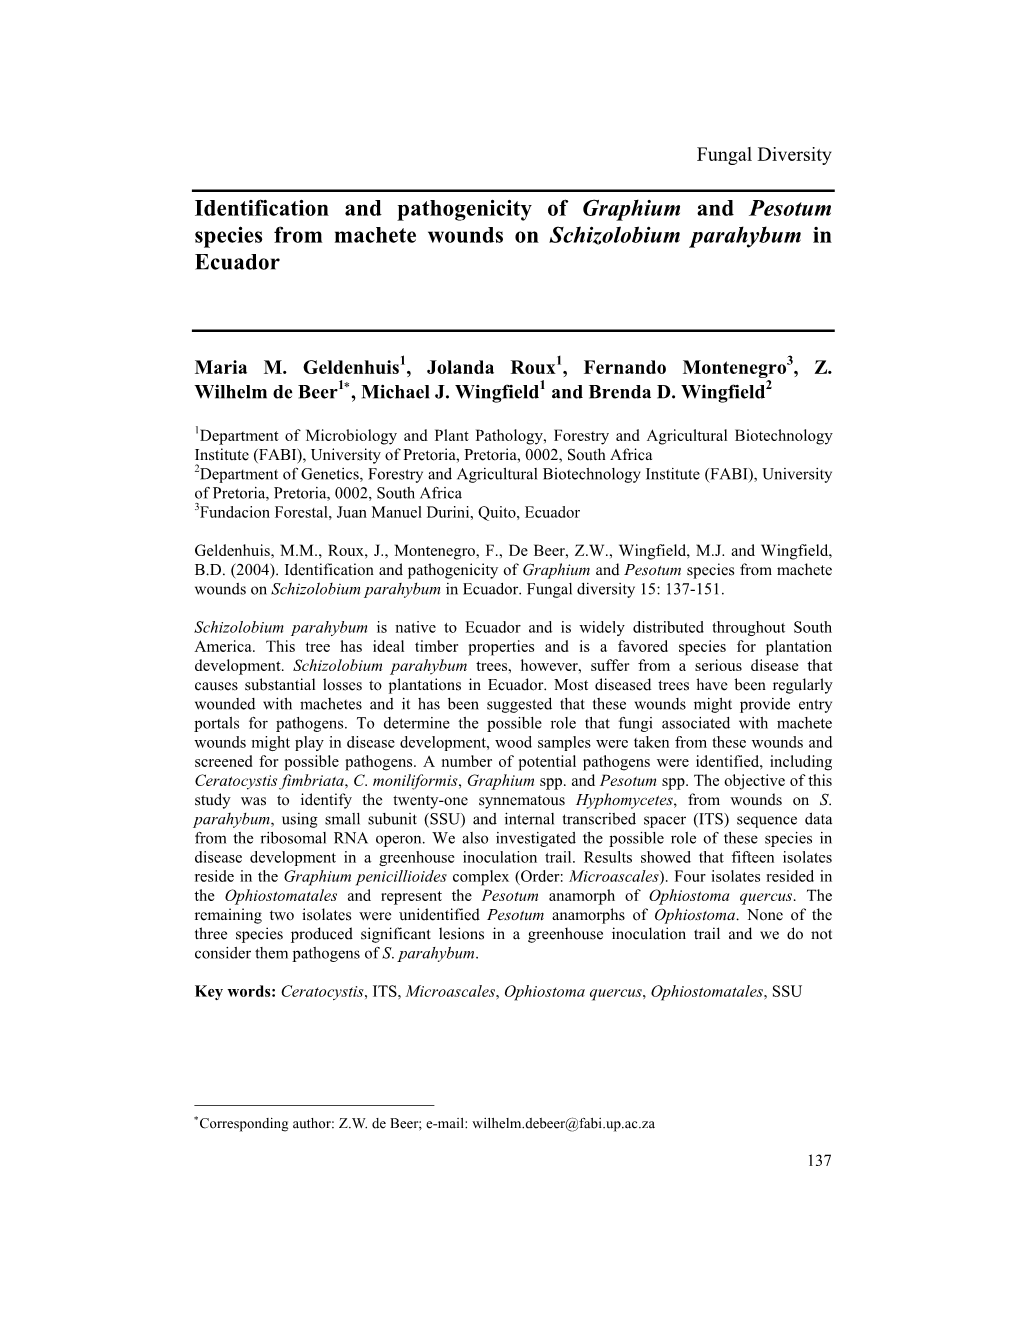 Identification and Pathogenicity of Graphium and Pesotum Species from Machete Wounds on Schizolobium Parahybum in Ecuador